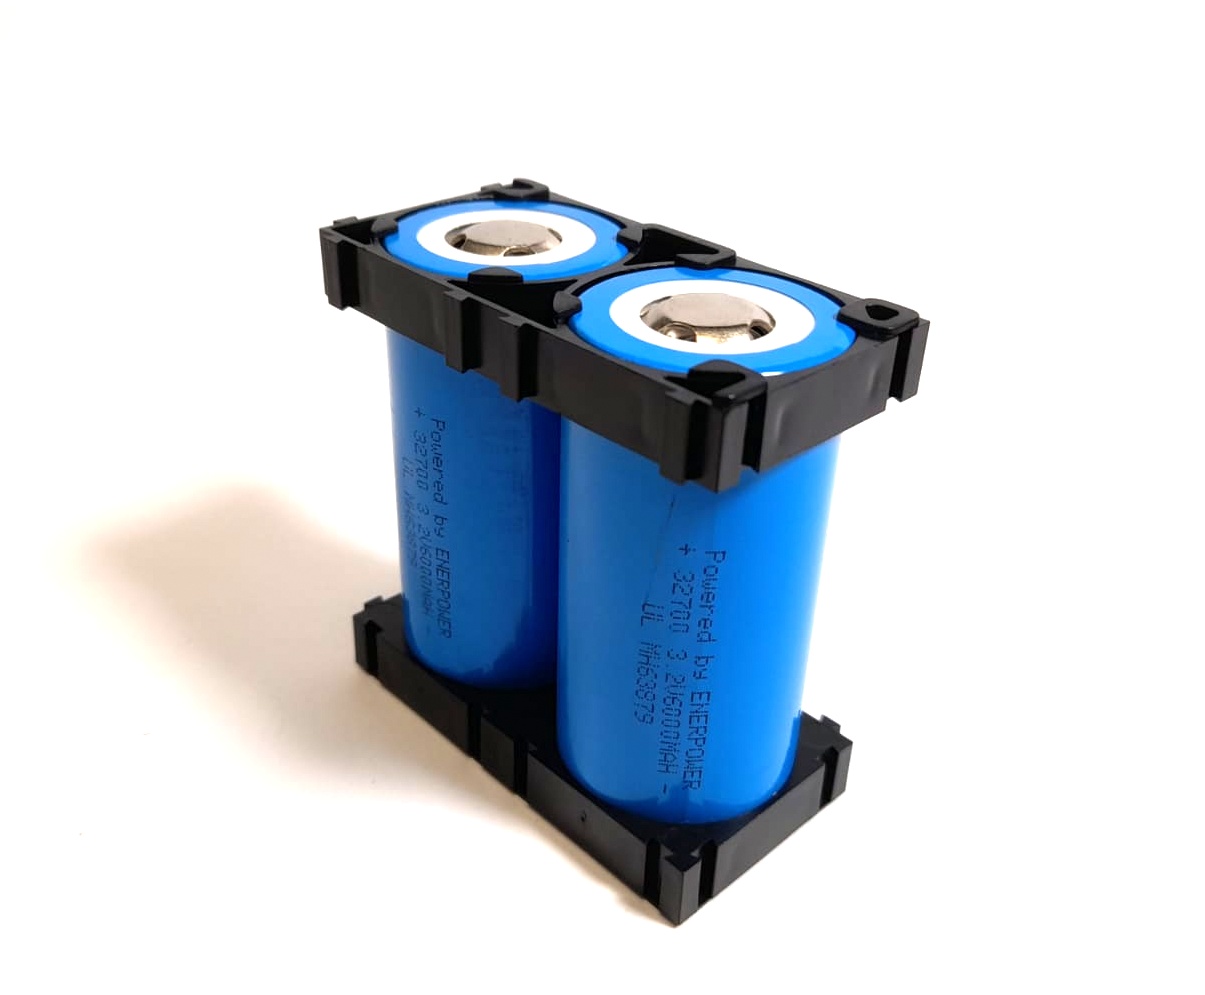 32700 Battery Spacer holder for 2 batteries size 32700 